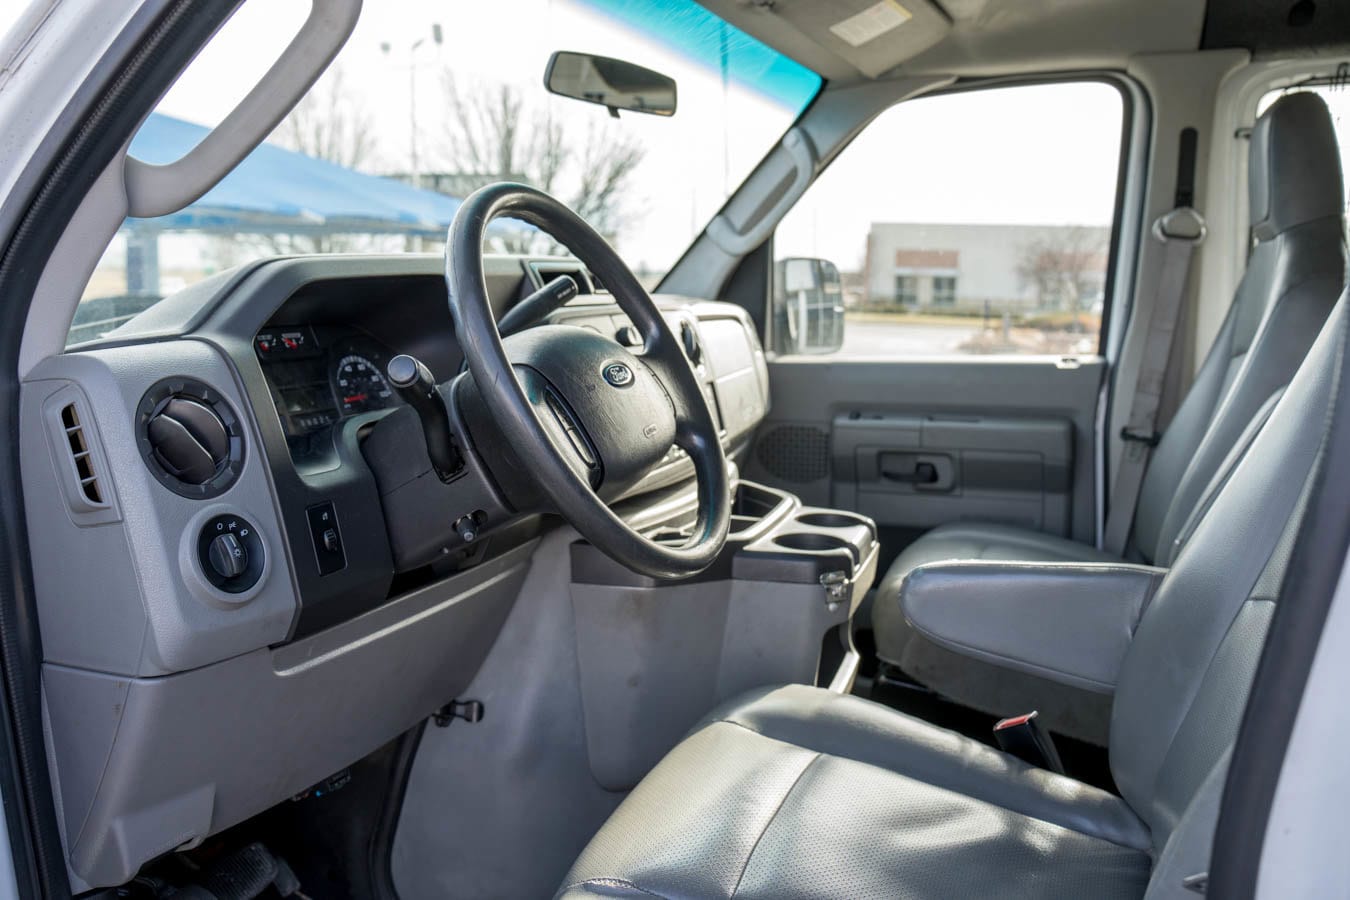 Used 2014 Ford E-Series Econoline Van Commercial with VIN 1FTNE1EW6EDA70922 for sale in Wichita, KS